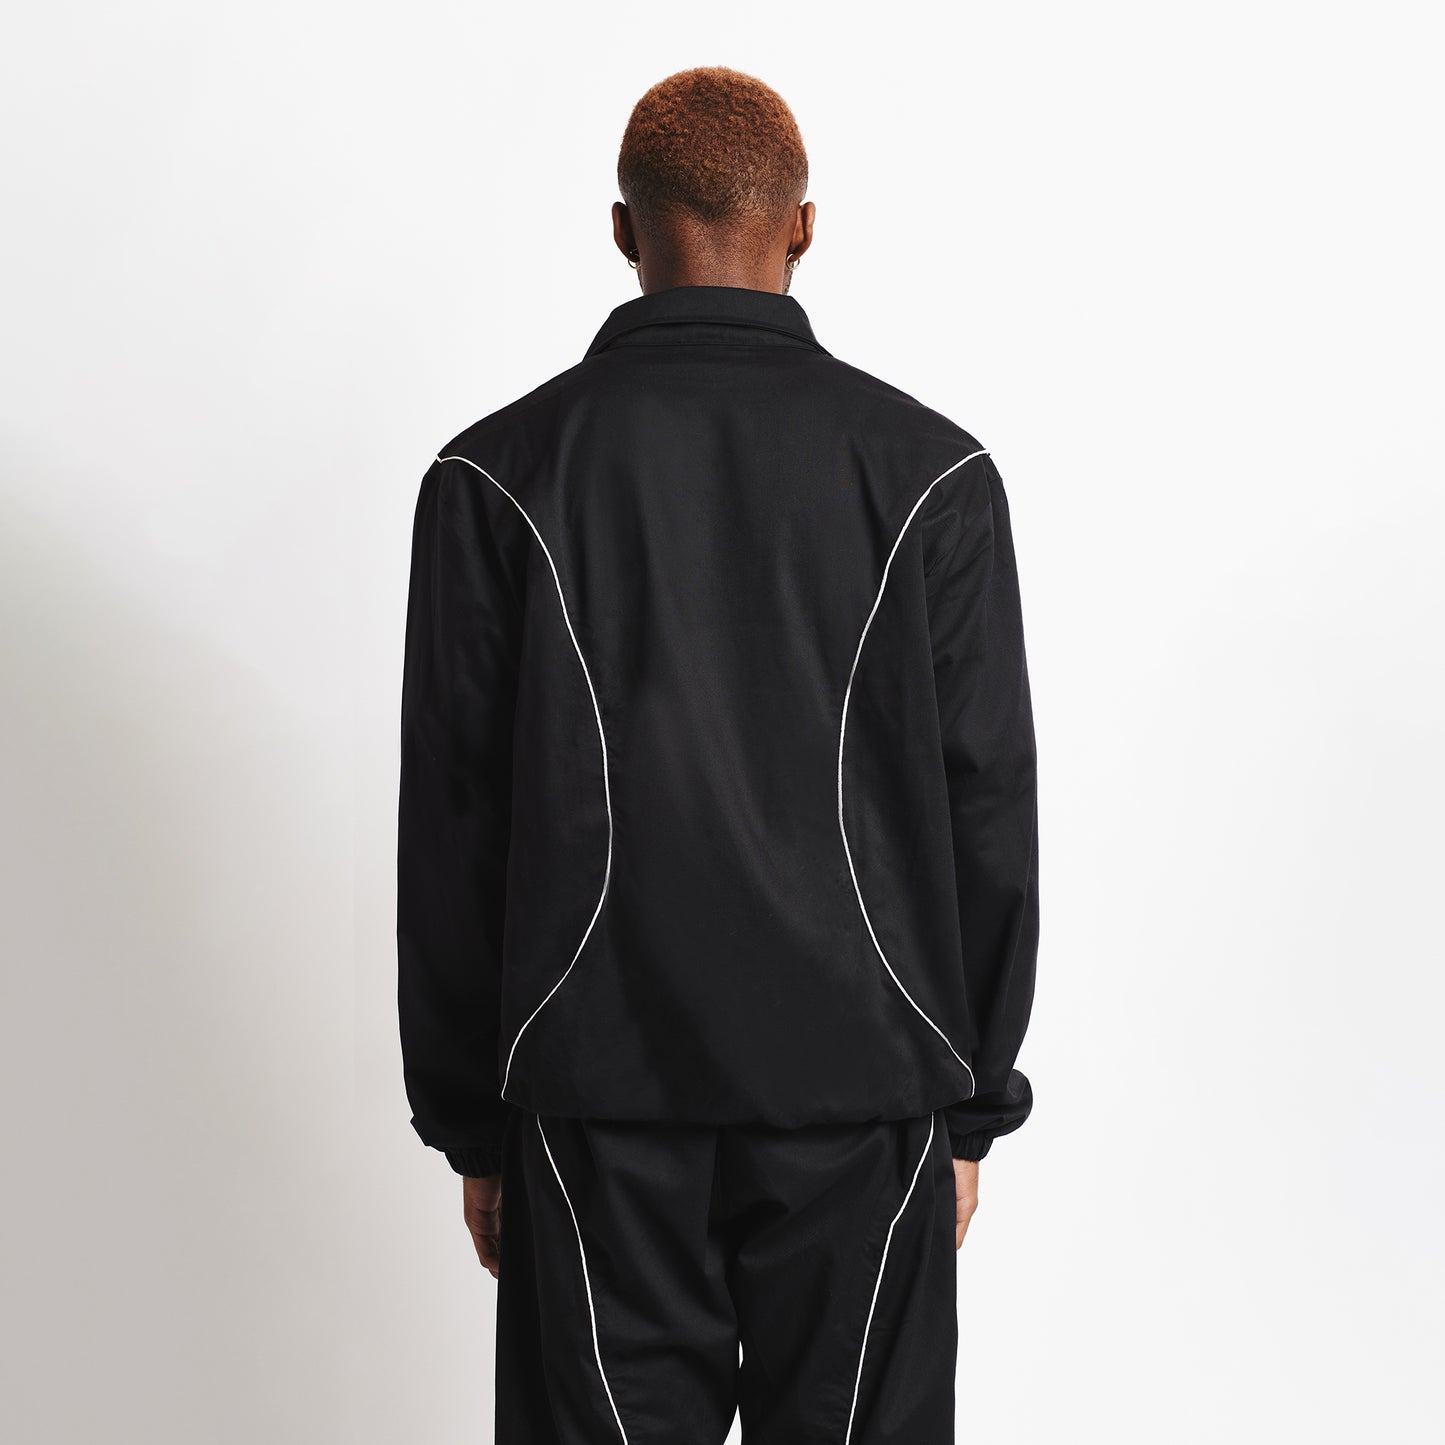 Pullover Track Jacket - Black - GVNMNT Clothing Co', European streetwear.